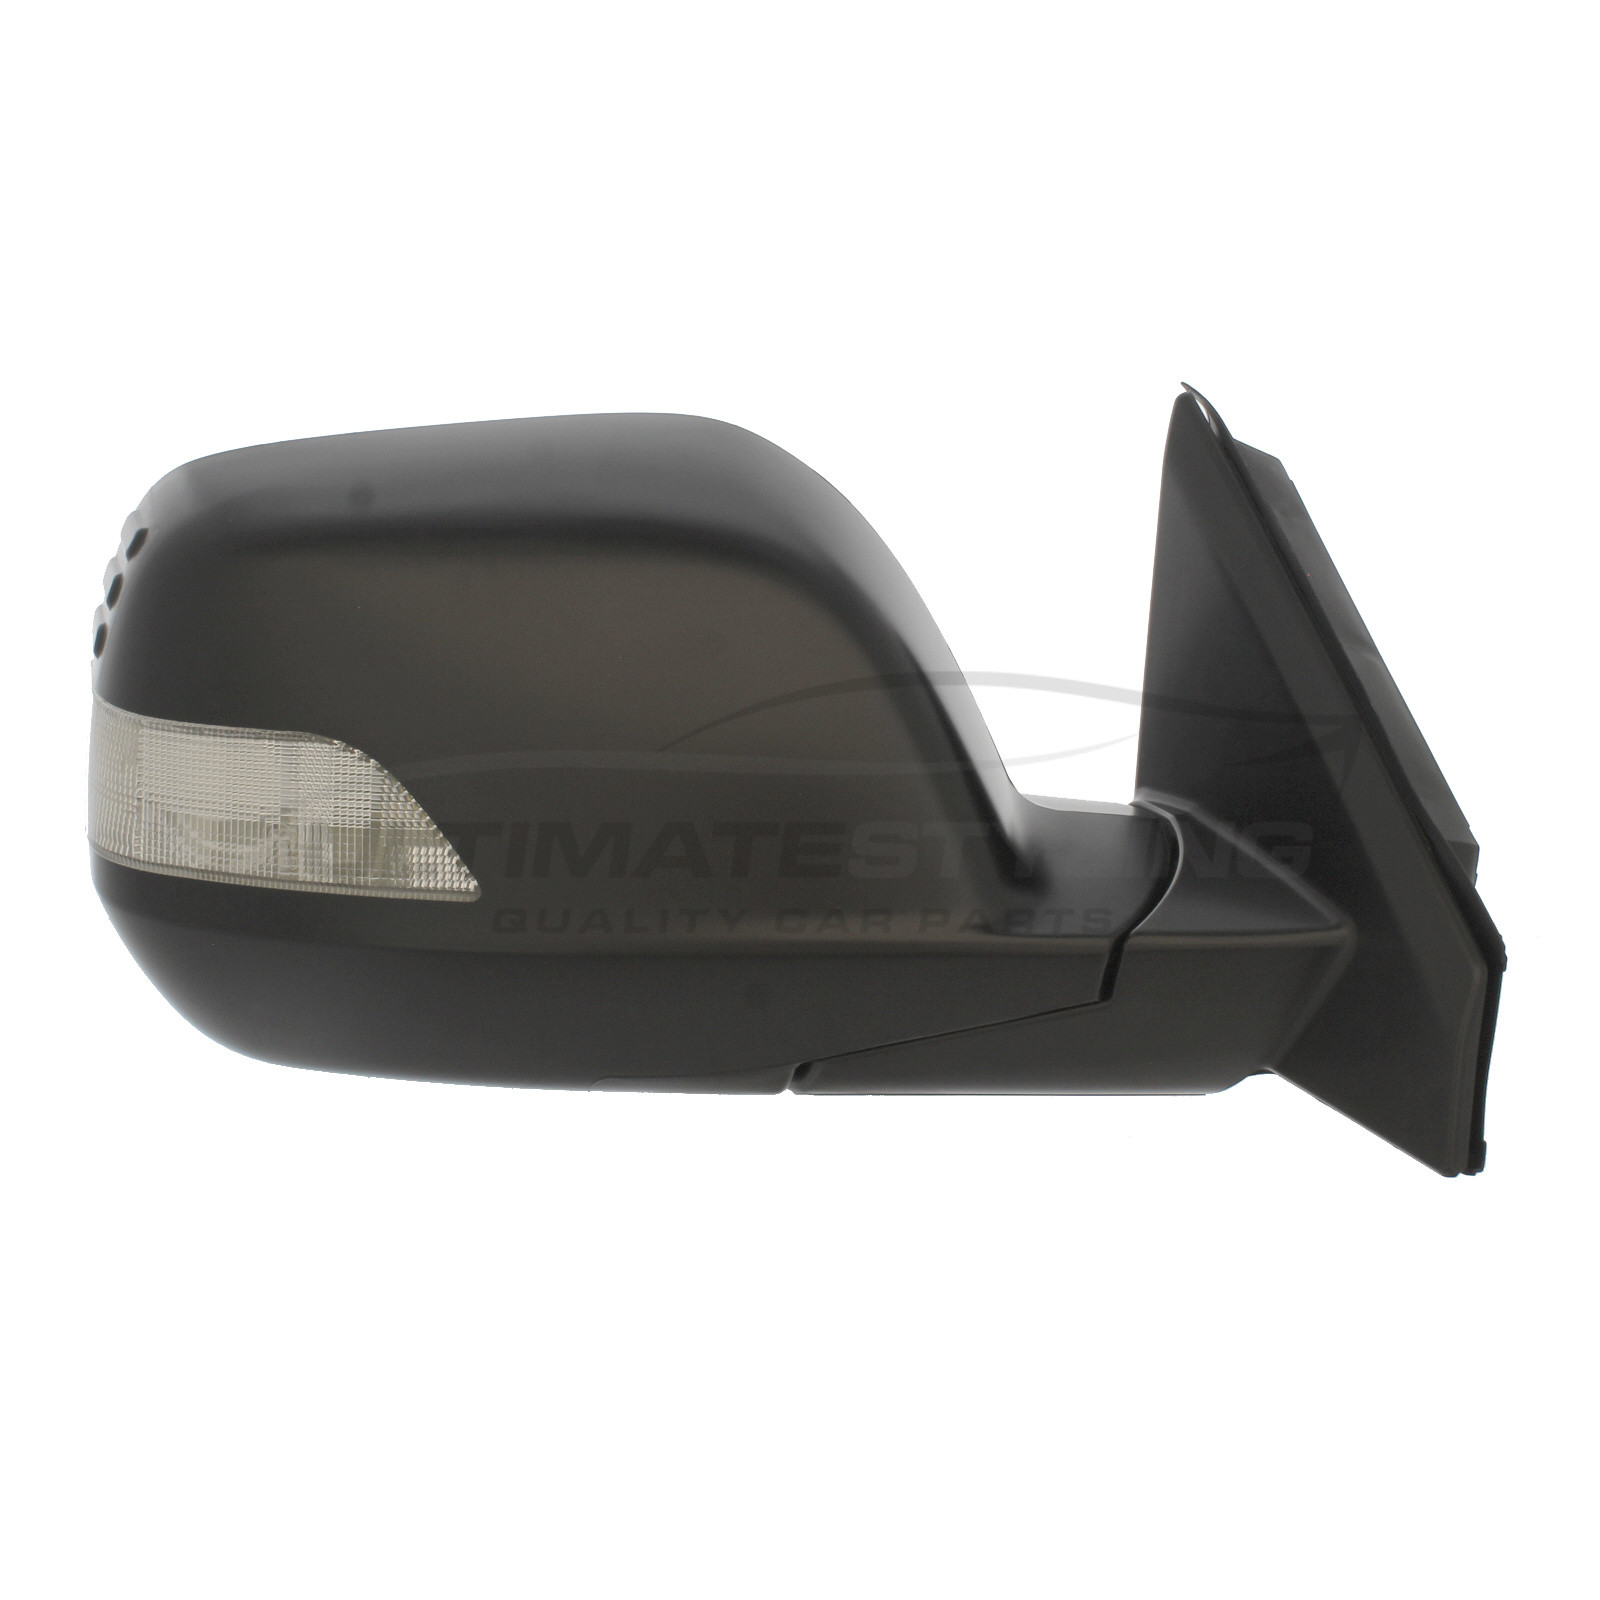 Honda CR-V Wing Mirror / Door Mirror - Drivers Side (RH) - Electric adjustment - Heated Glass - Power Folding - Indicator - Paintable - Black